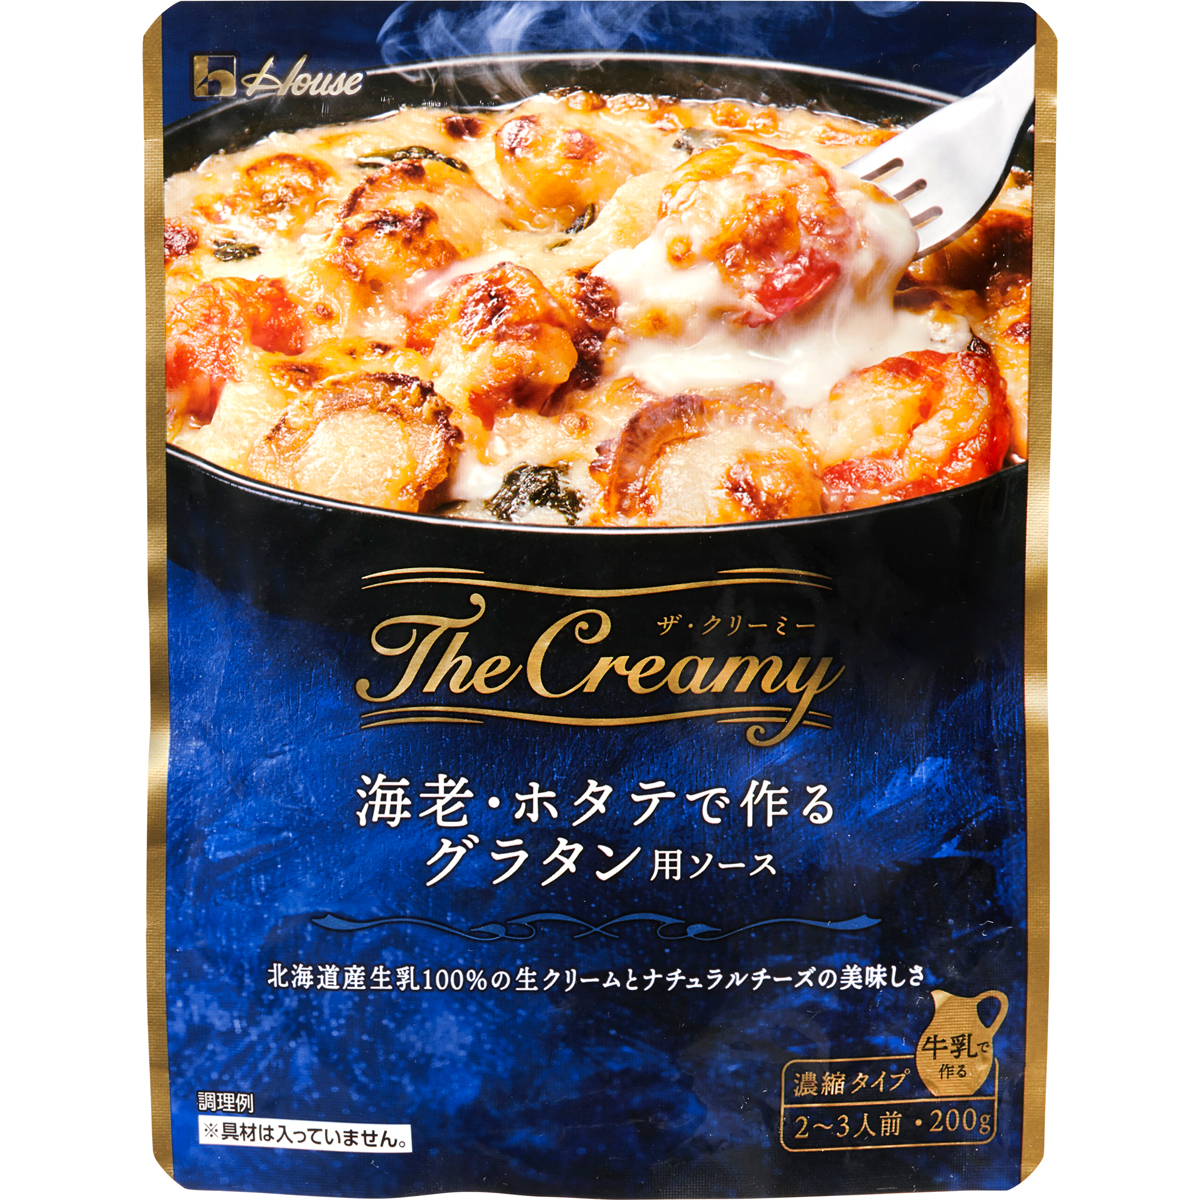 The Creamy 海老 ホタテで作るグラタン用ソース 商品カタログトップ ハウス食品